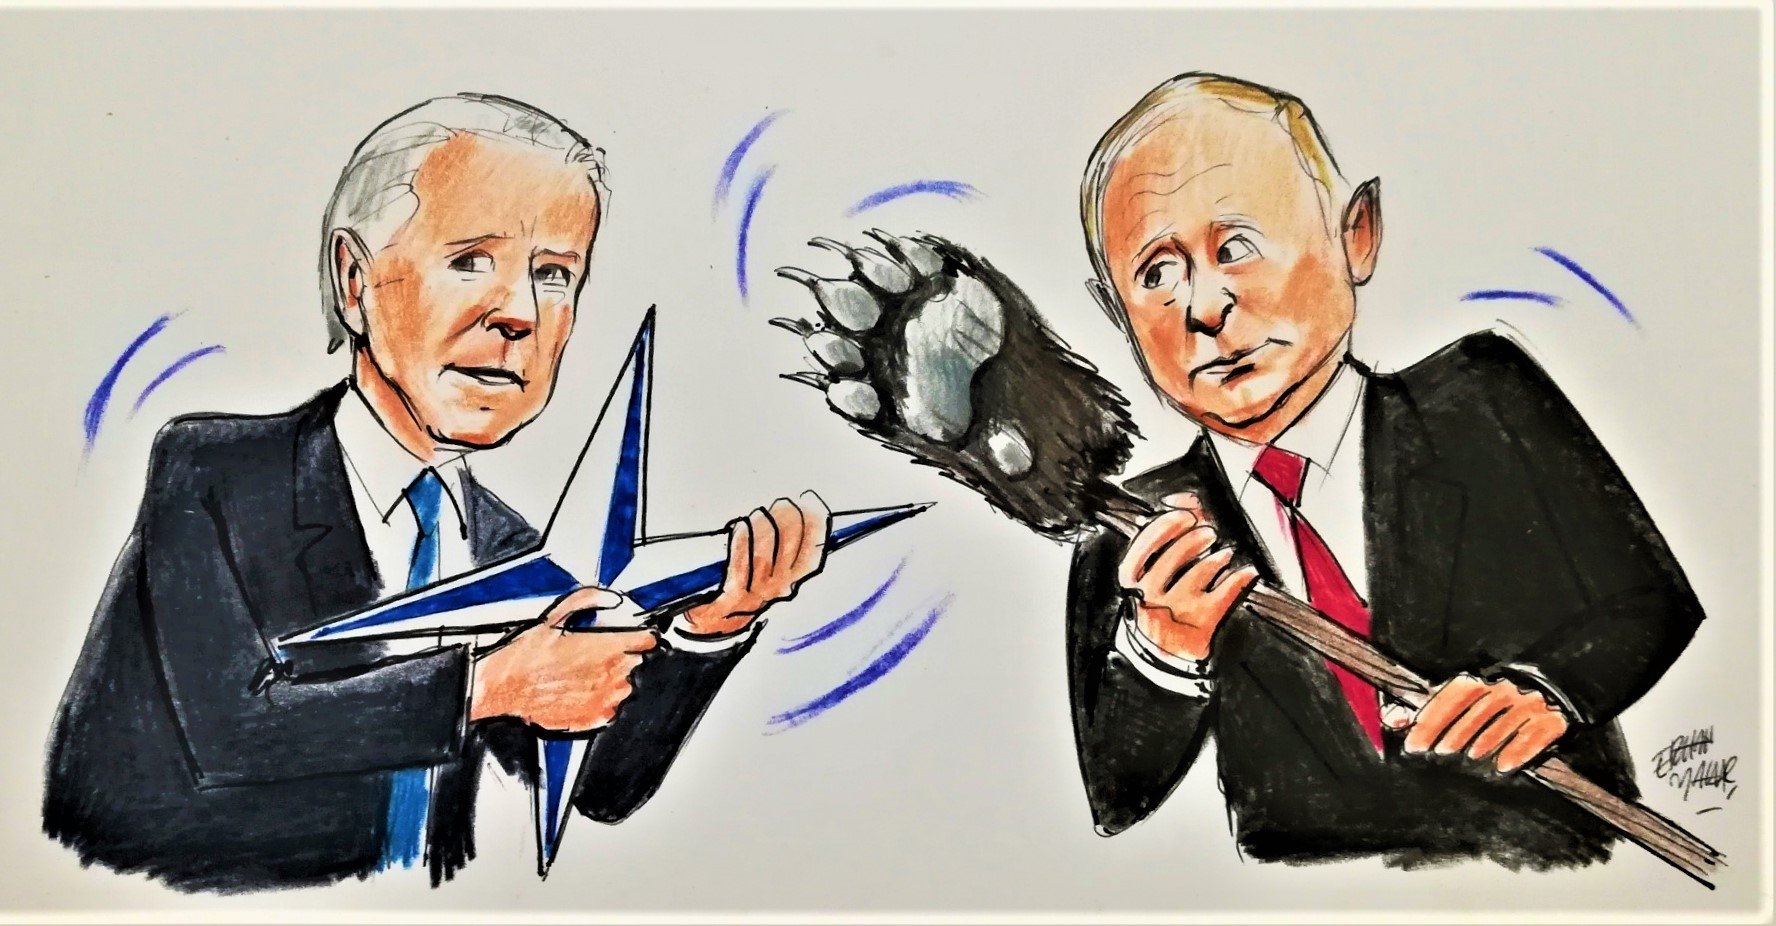 Donbass The first round between Biden and Putin